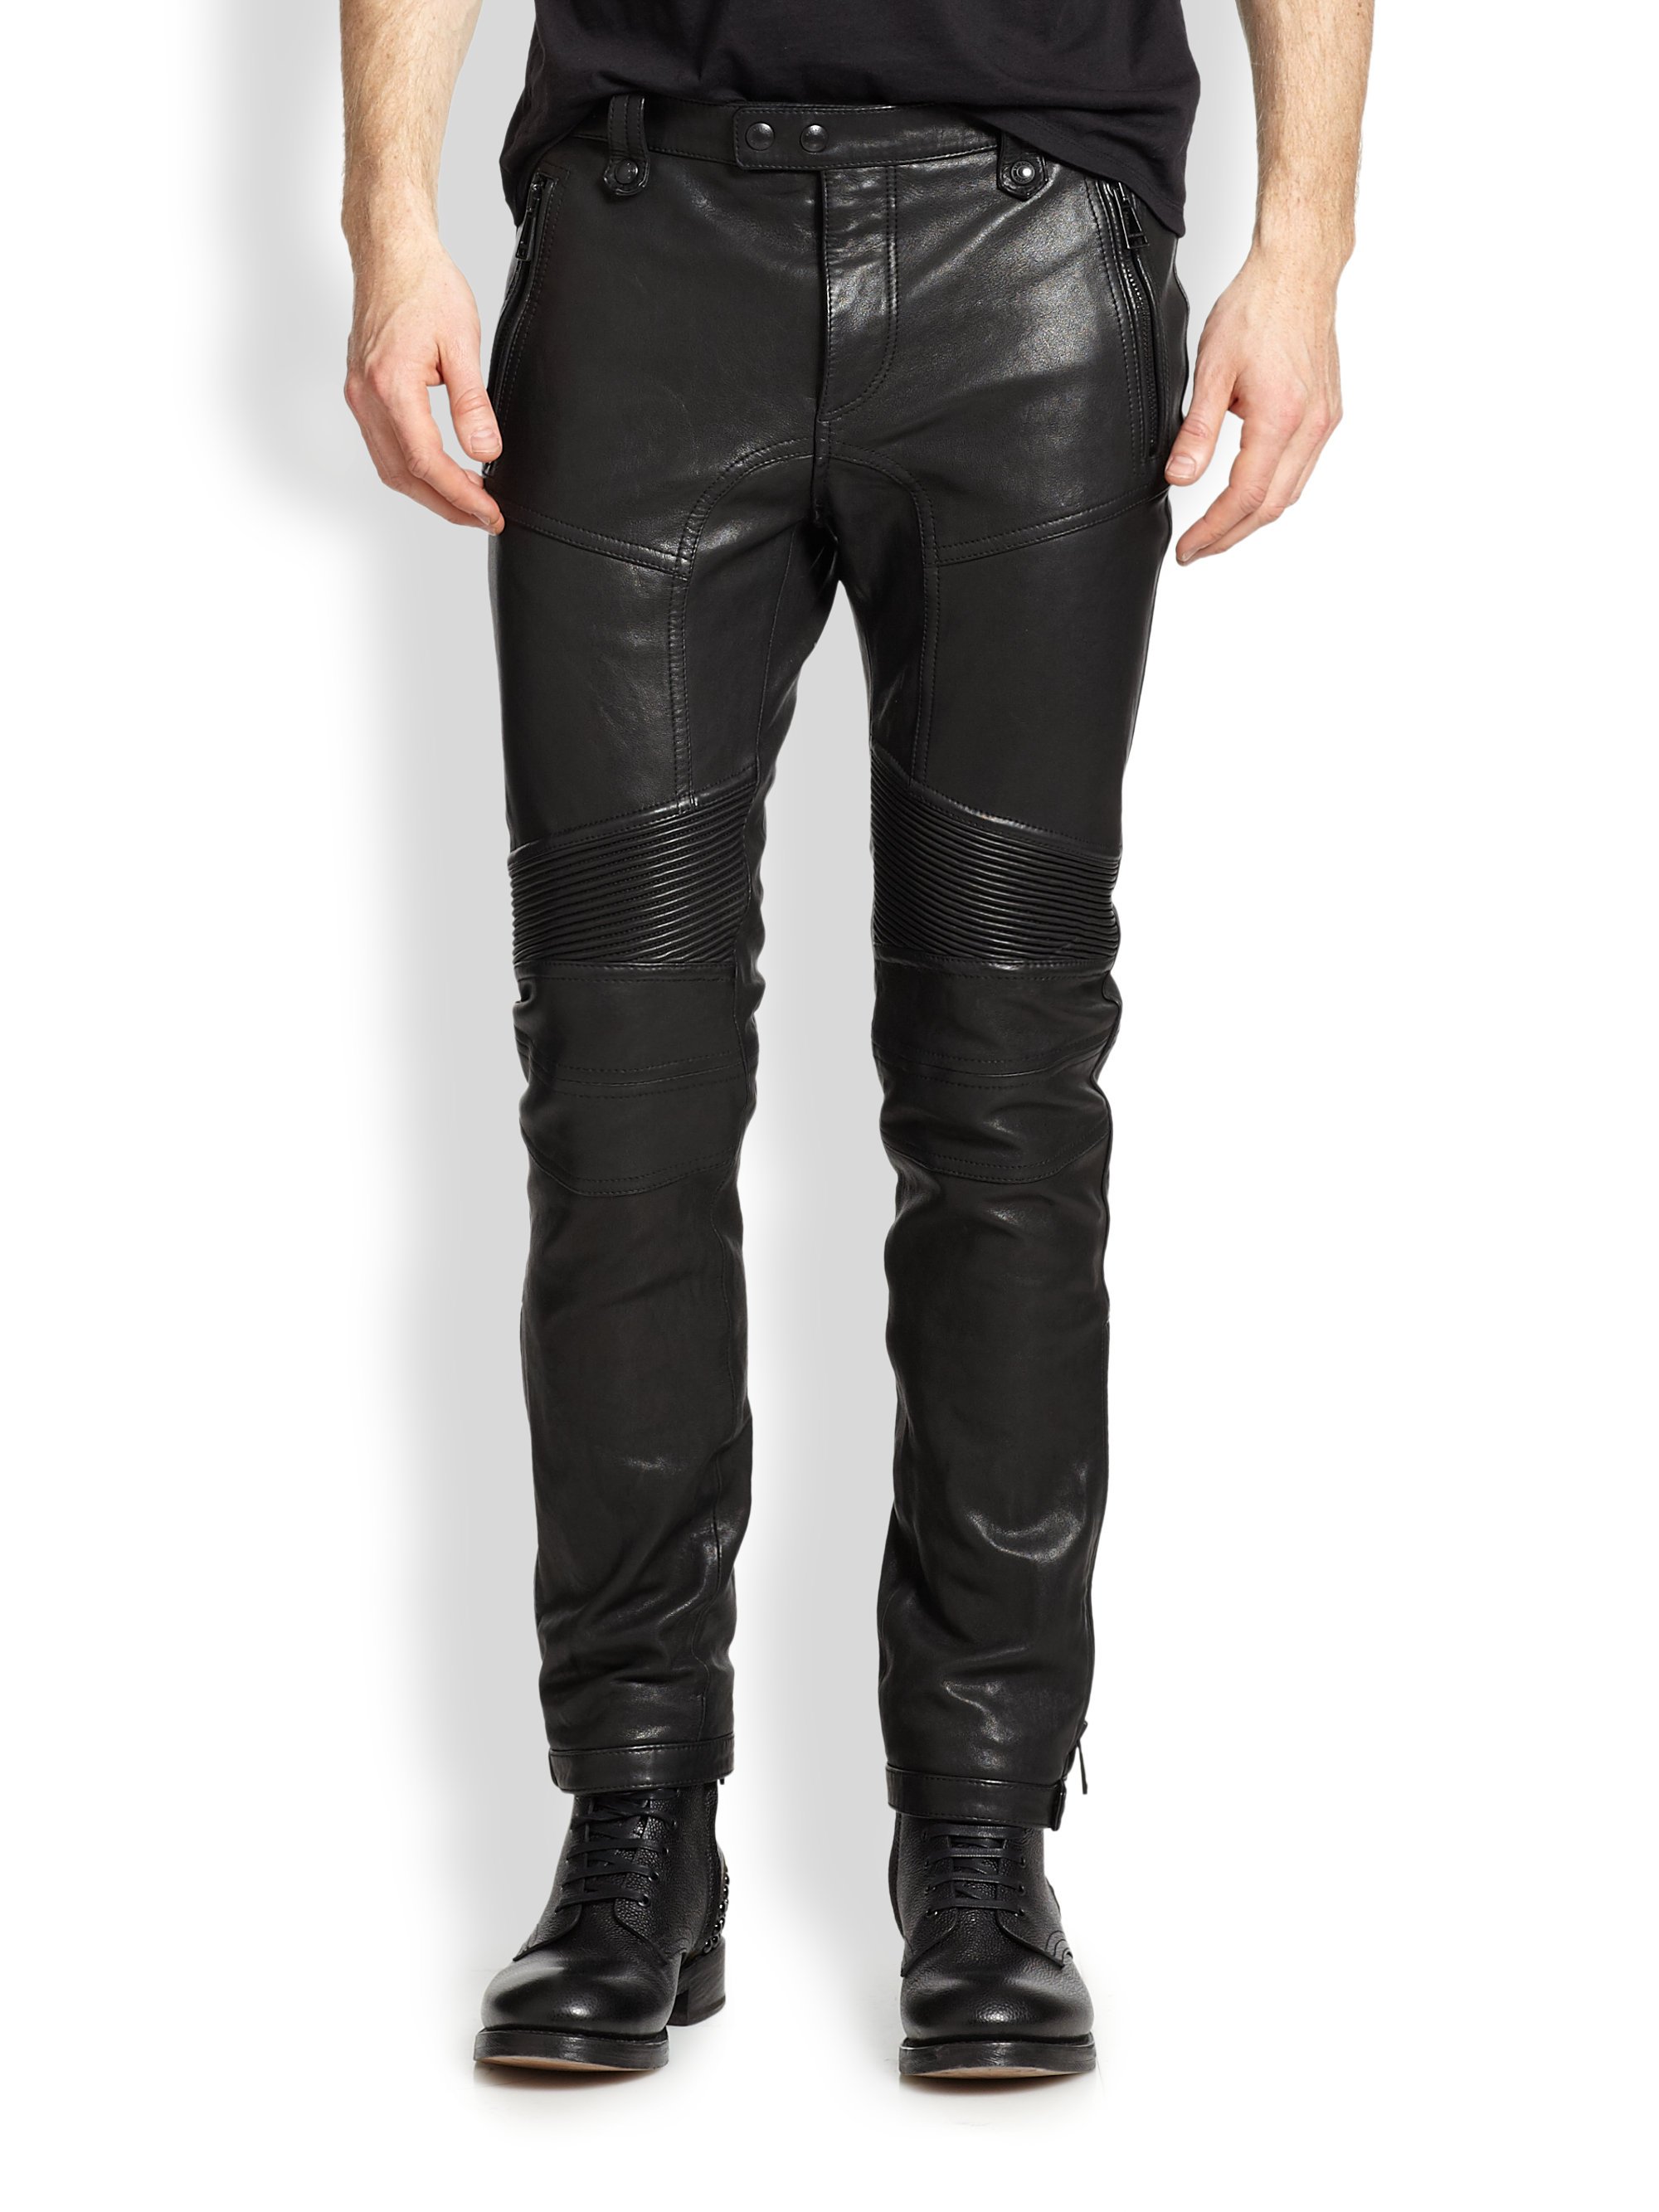 Lyst - Belstaff Washed Leather Pants in Black for Men